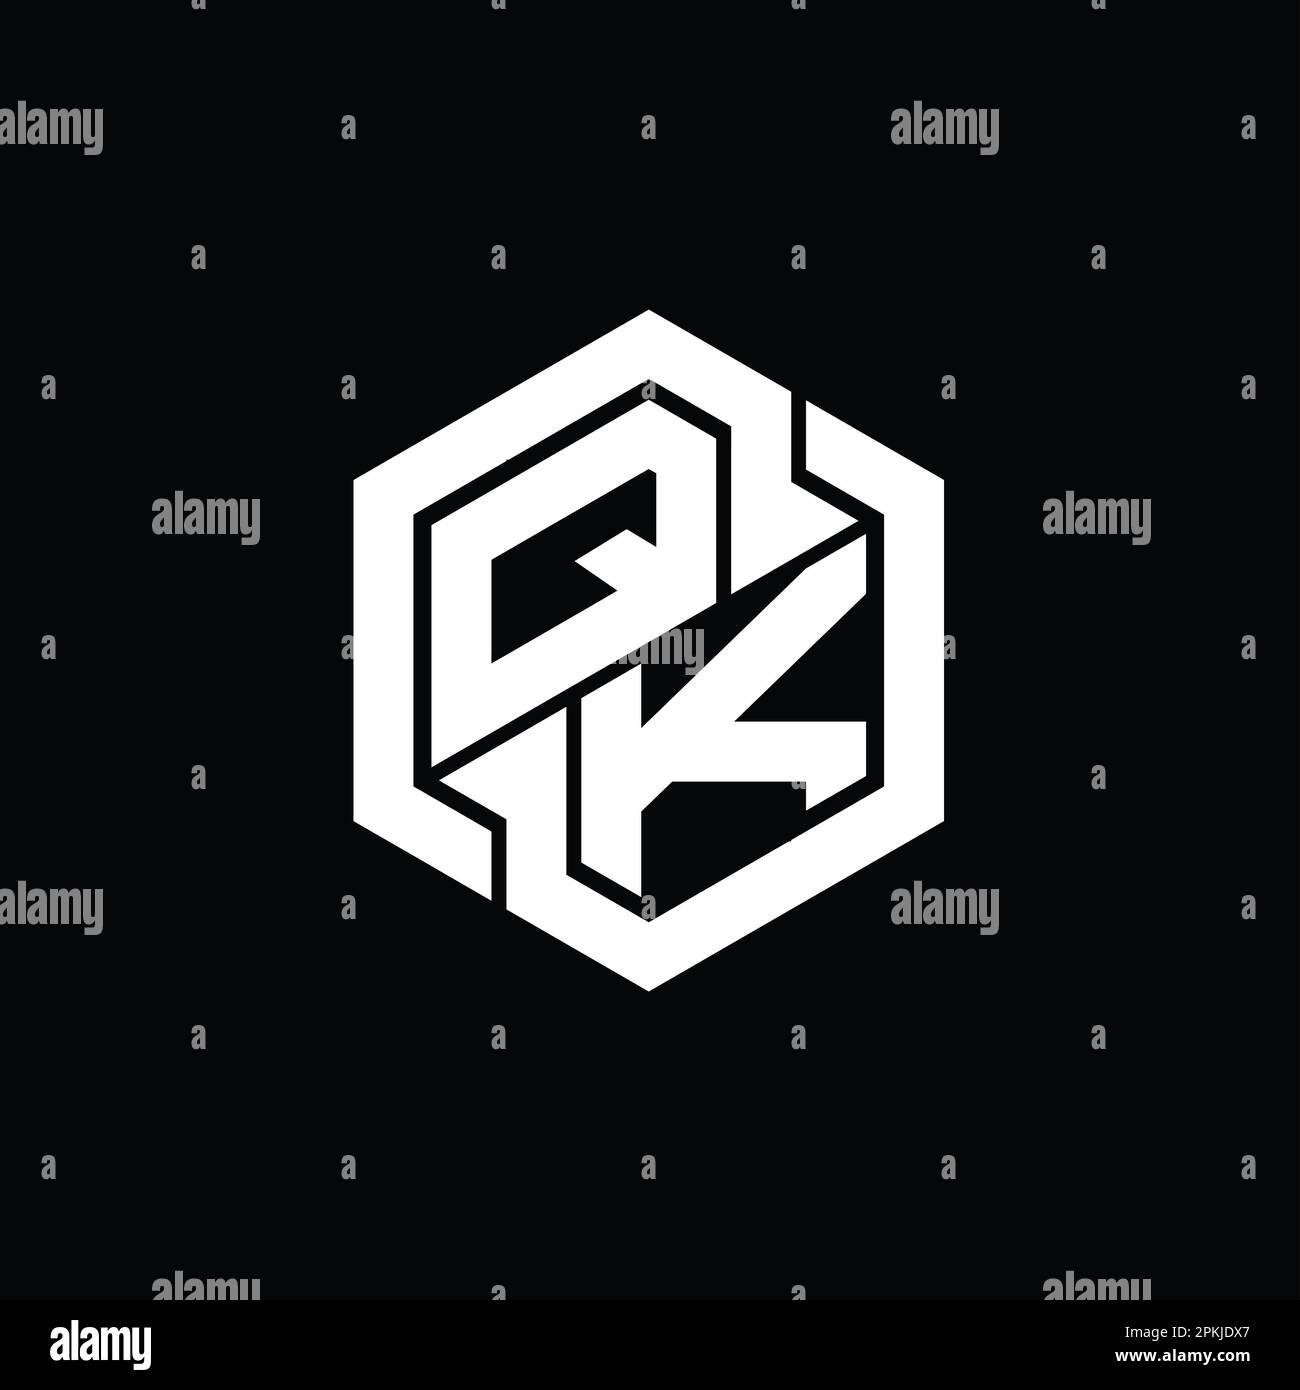 QK Logo monogram gaming with hexagon geometric shape design template Stock Photo